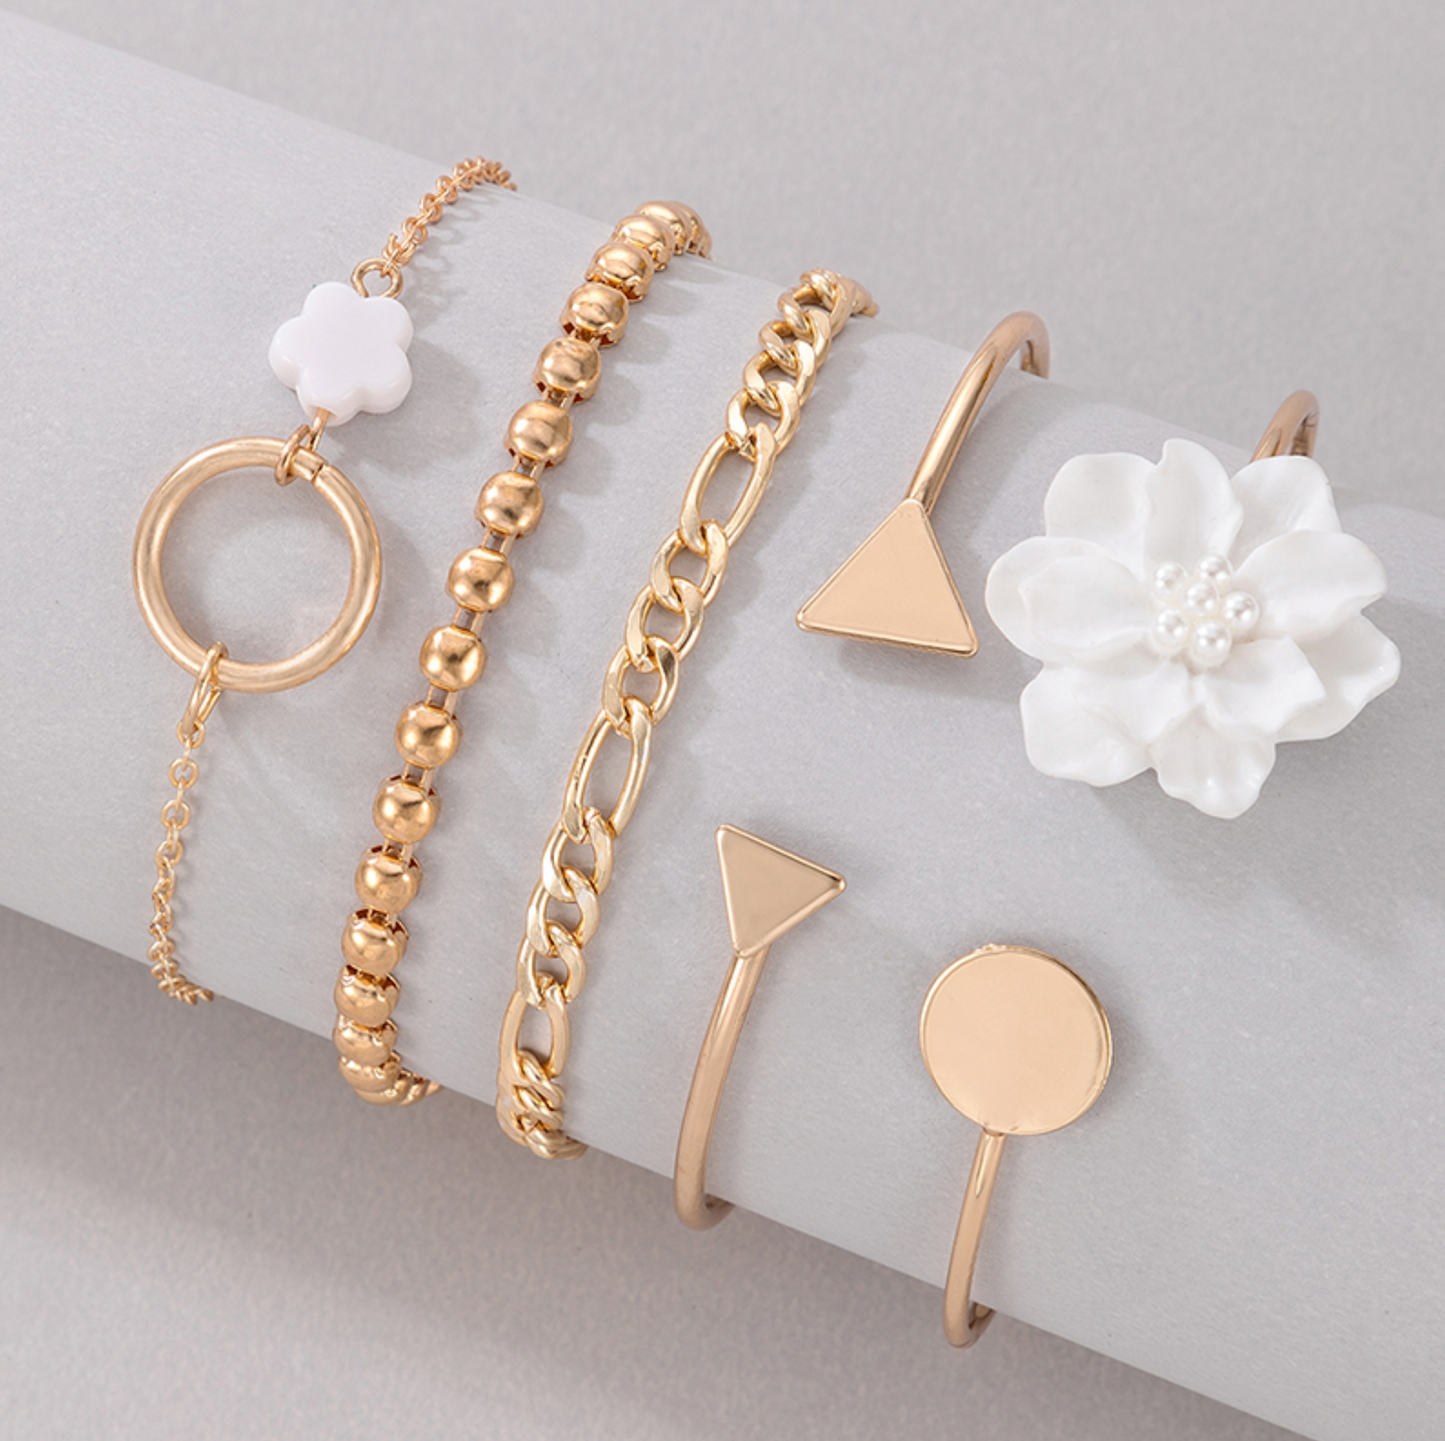 Goldtone & White Floral Chain Bracelet Set